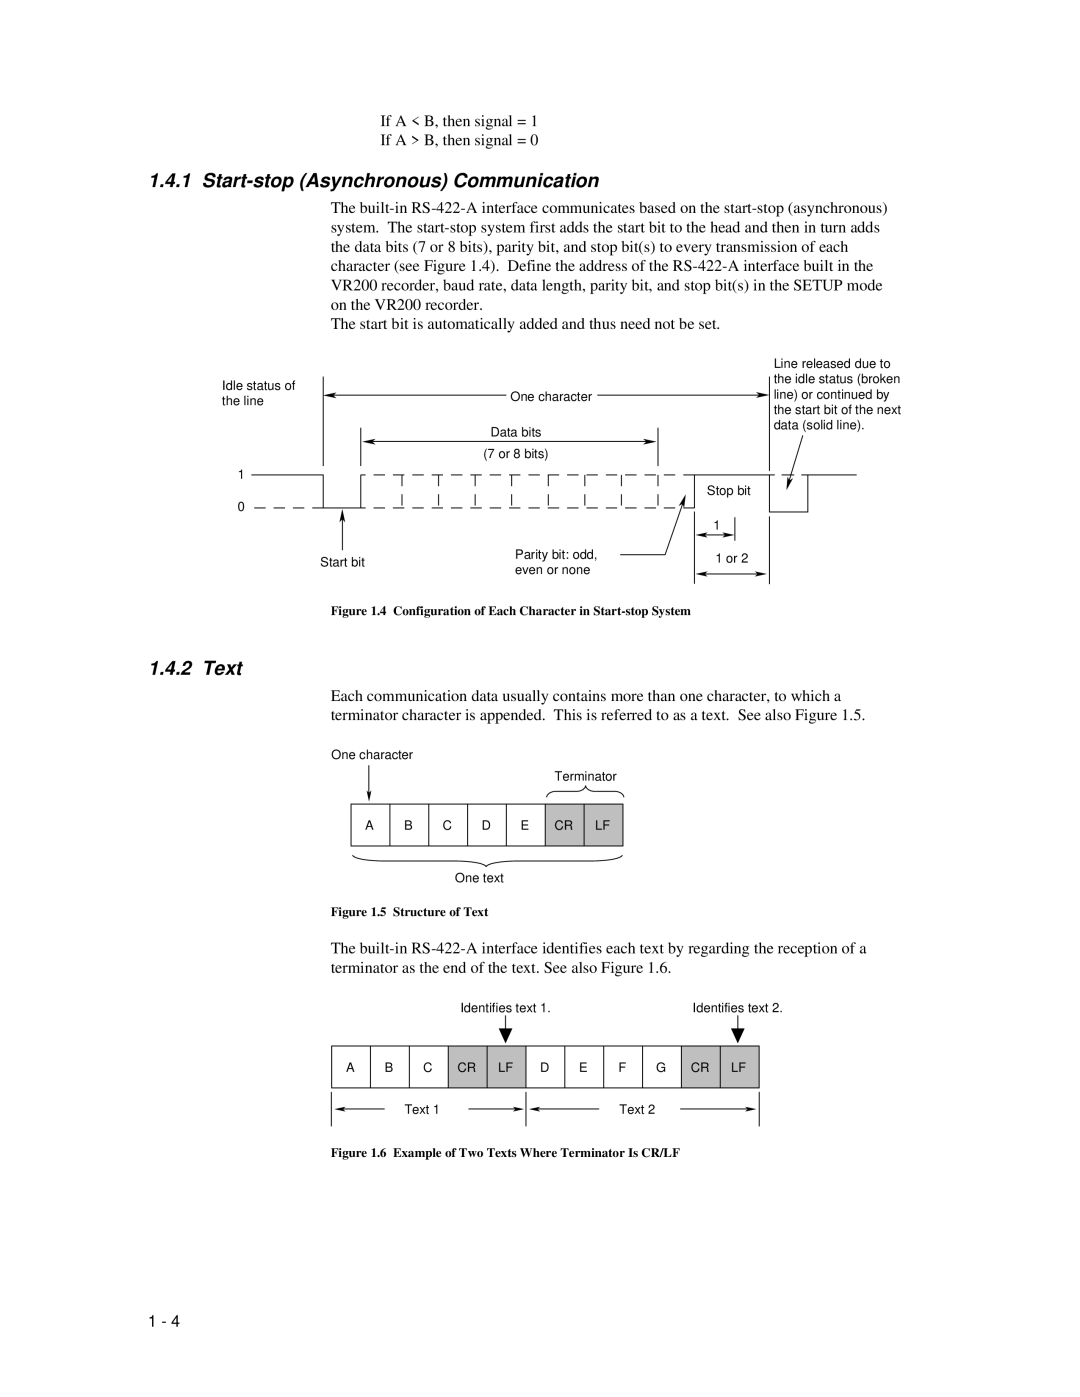 Omega Speaker Systems VR200 instruction manual Start-stop Asynchronous Communication, Text 